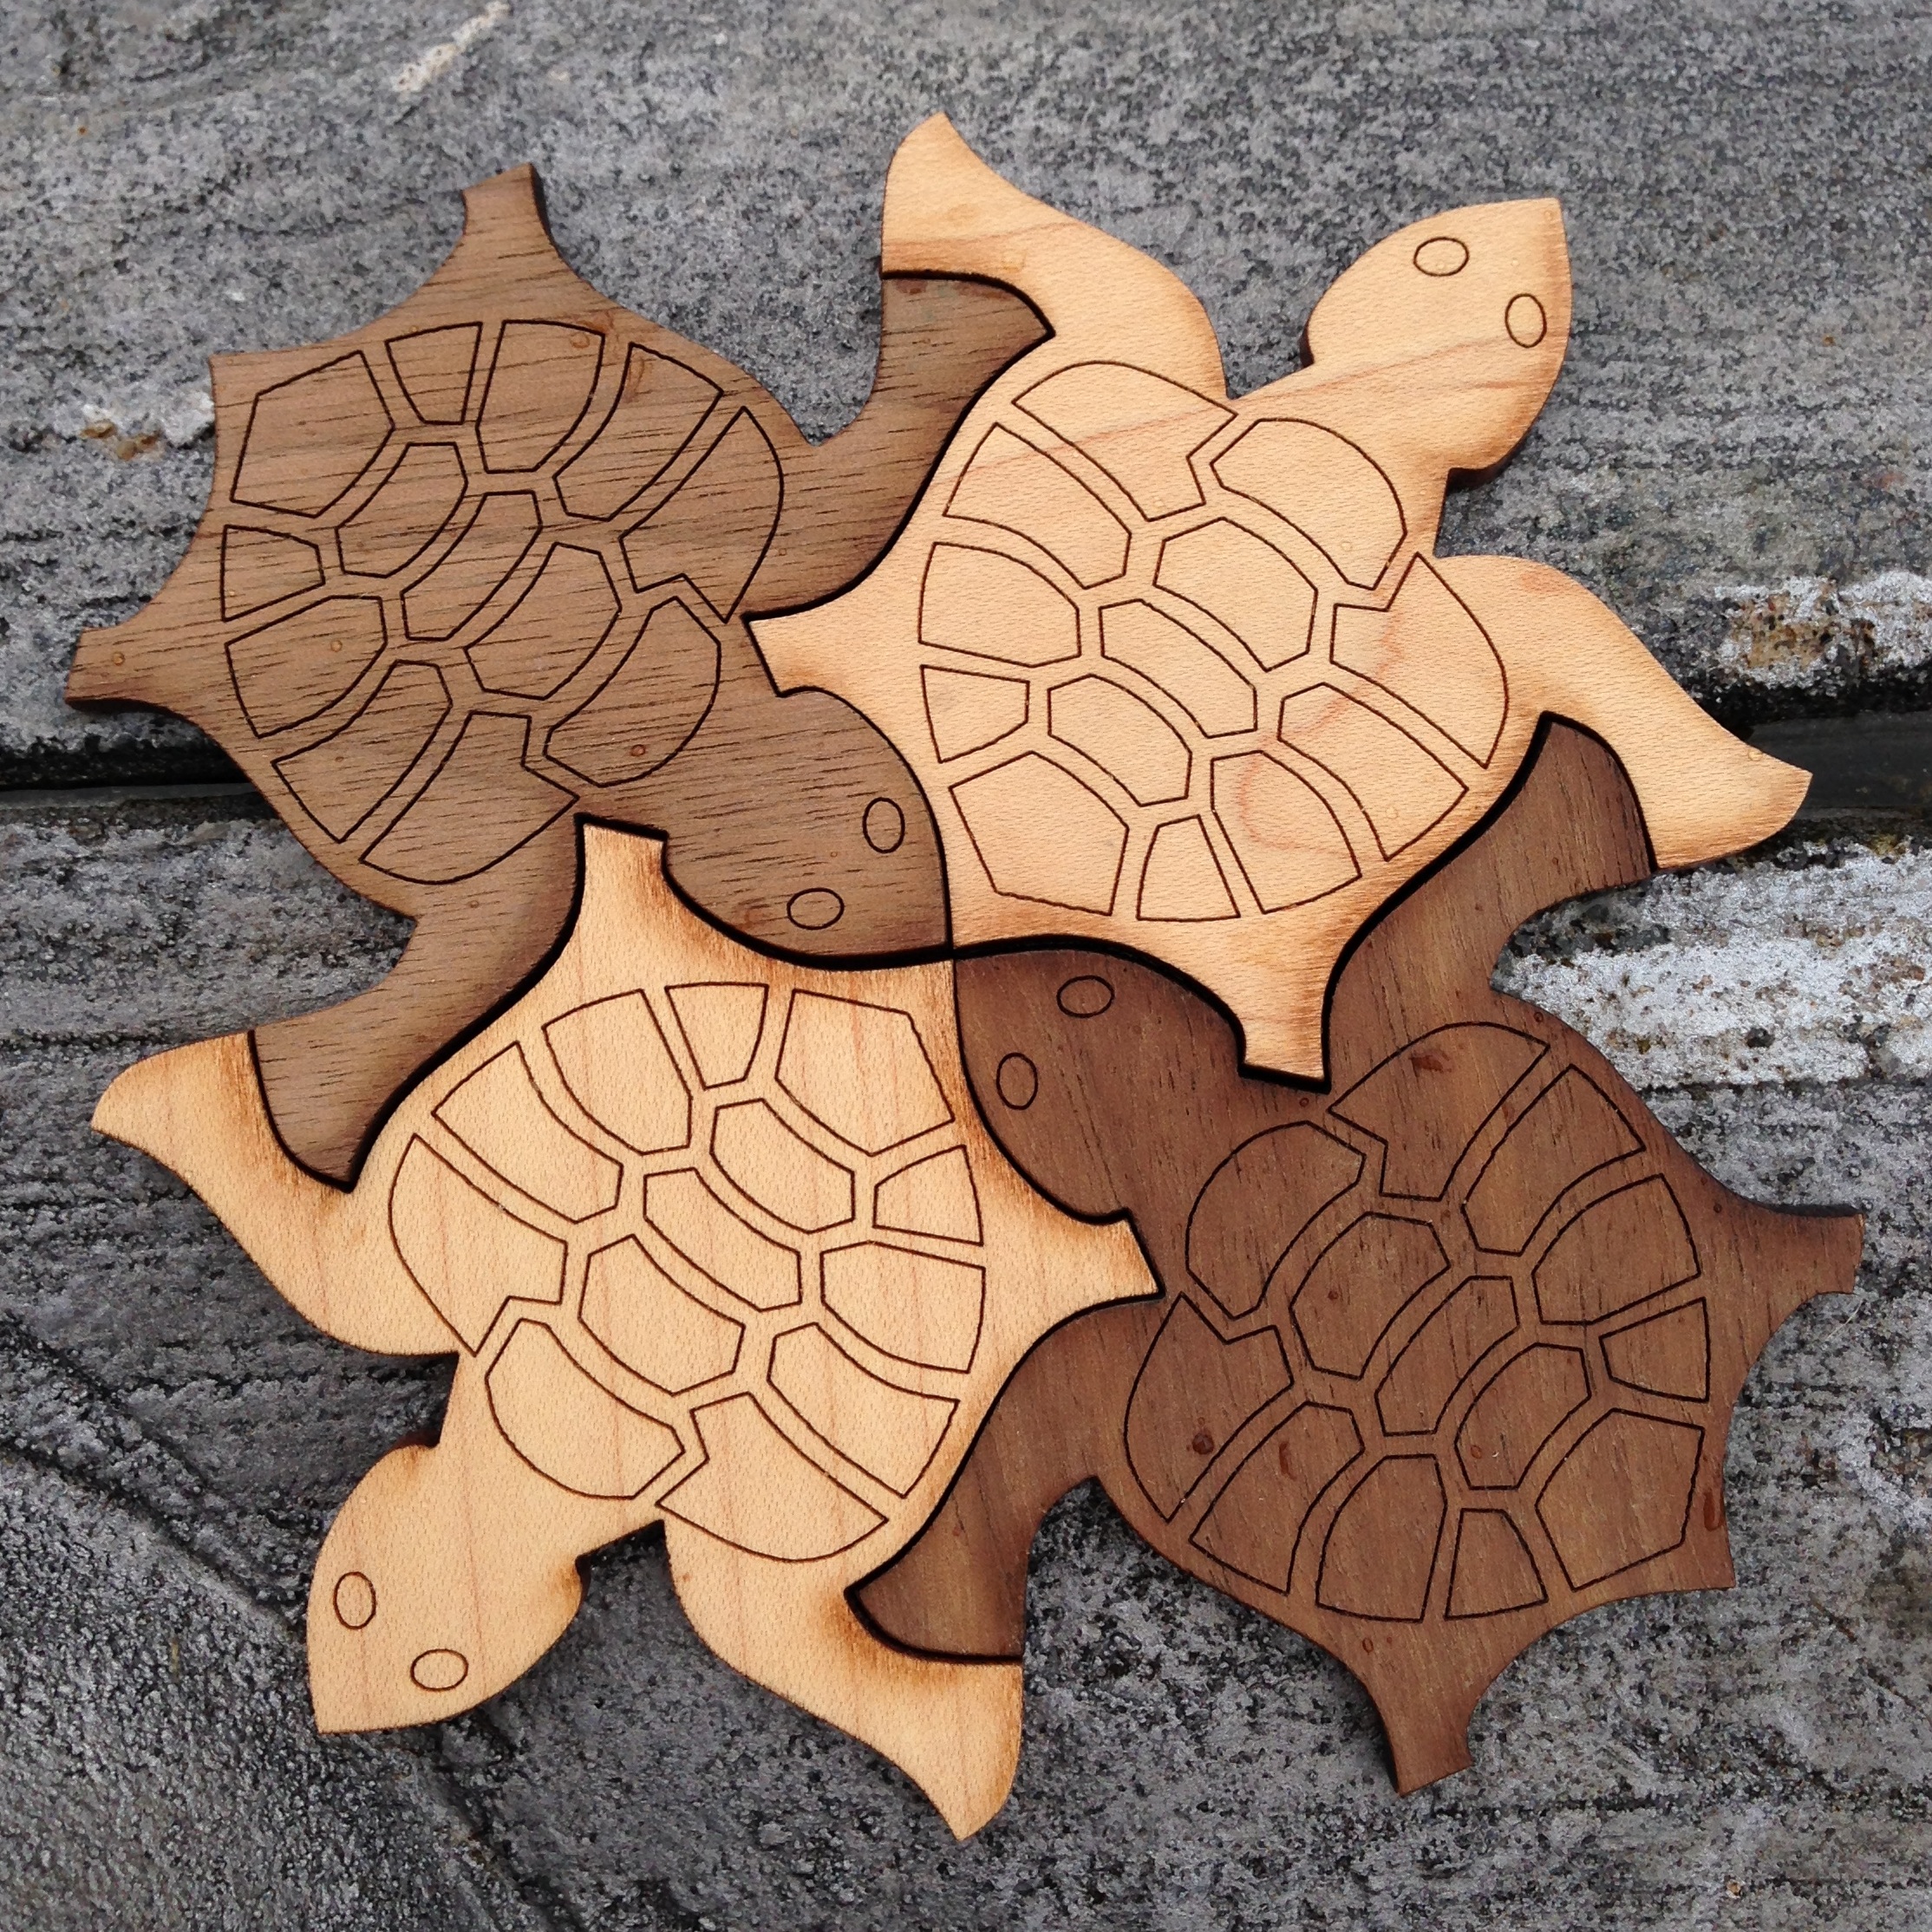 Light and dark wooden tiling turtles